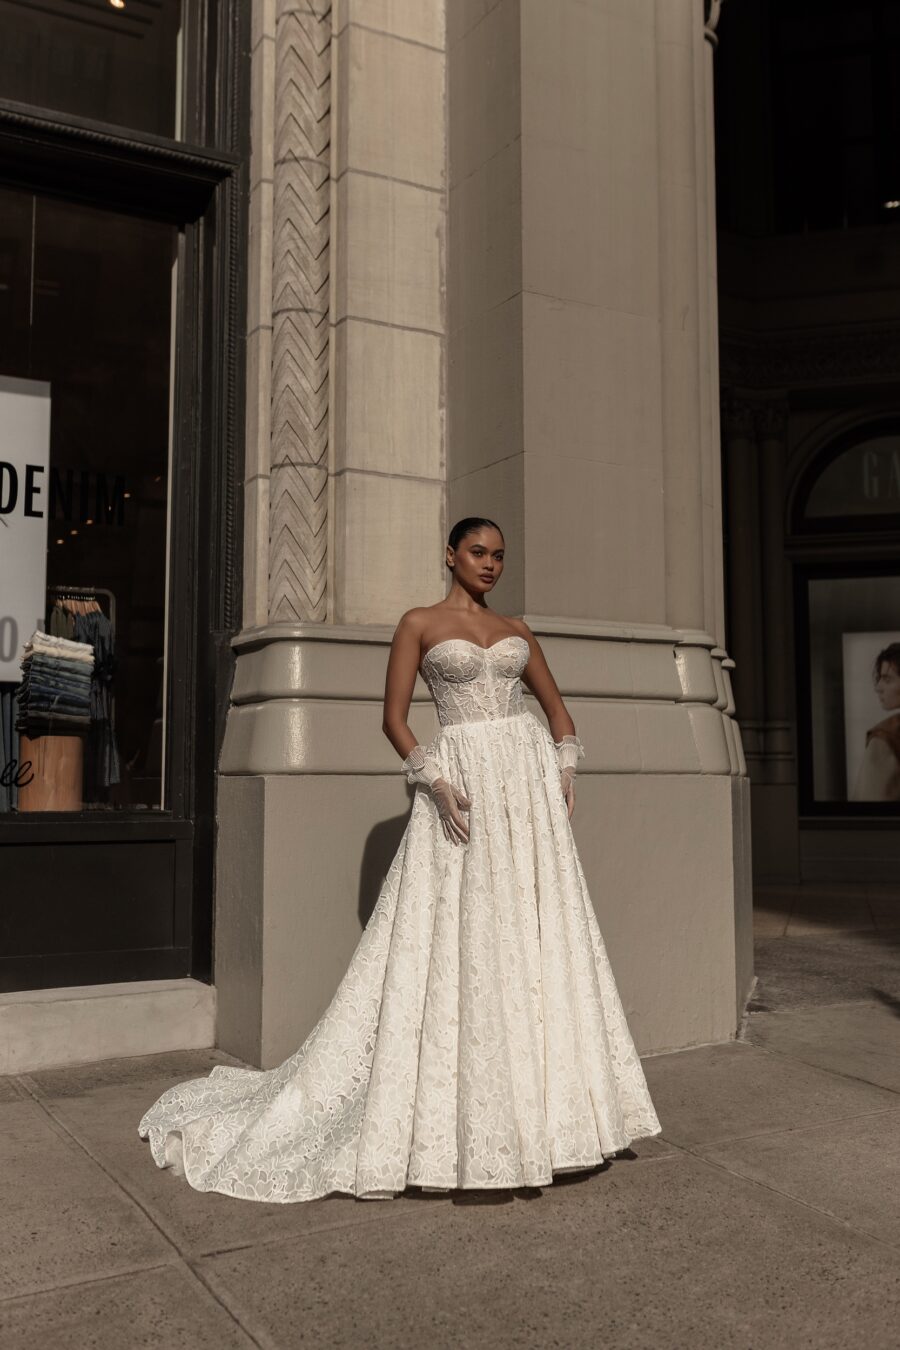 Kay 1 wedding dress by woná concept from urban elegance